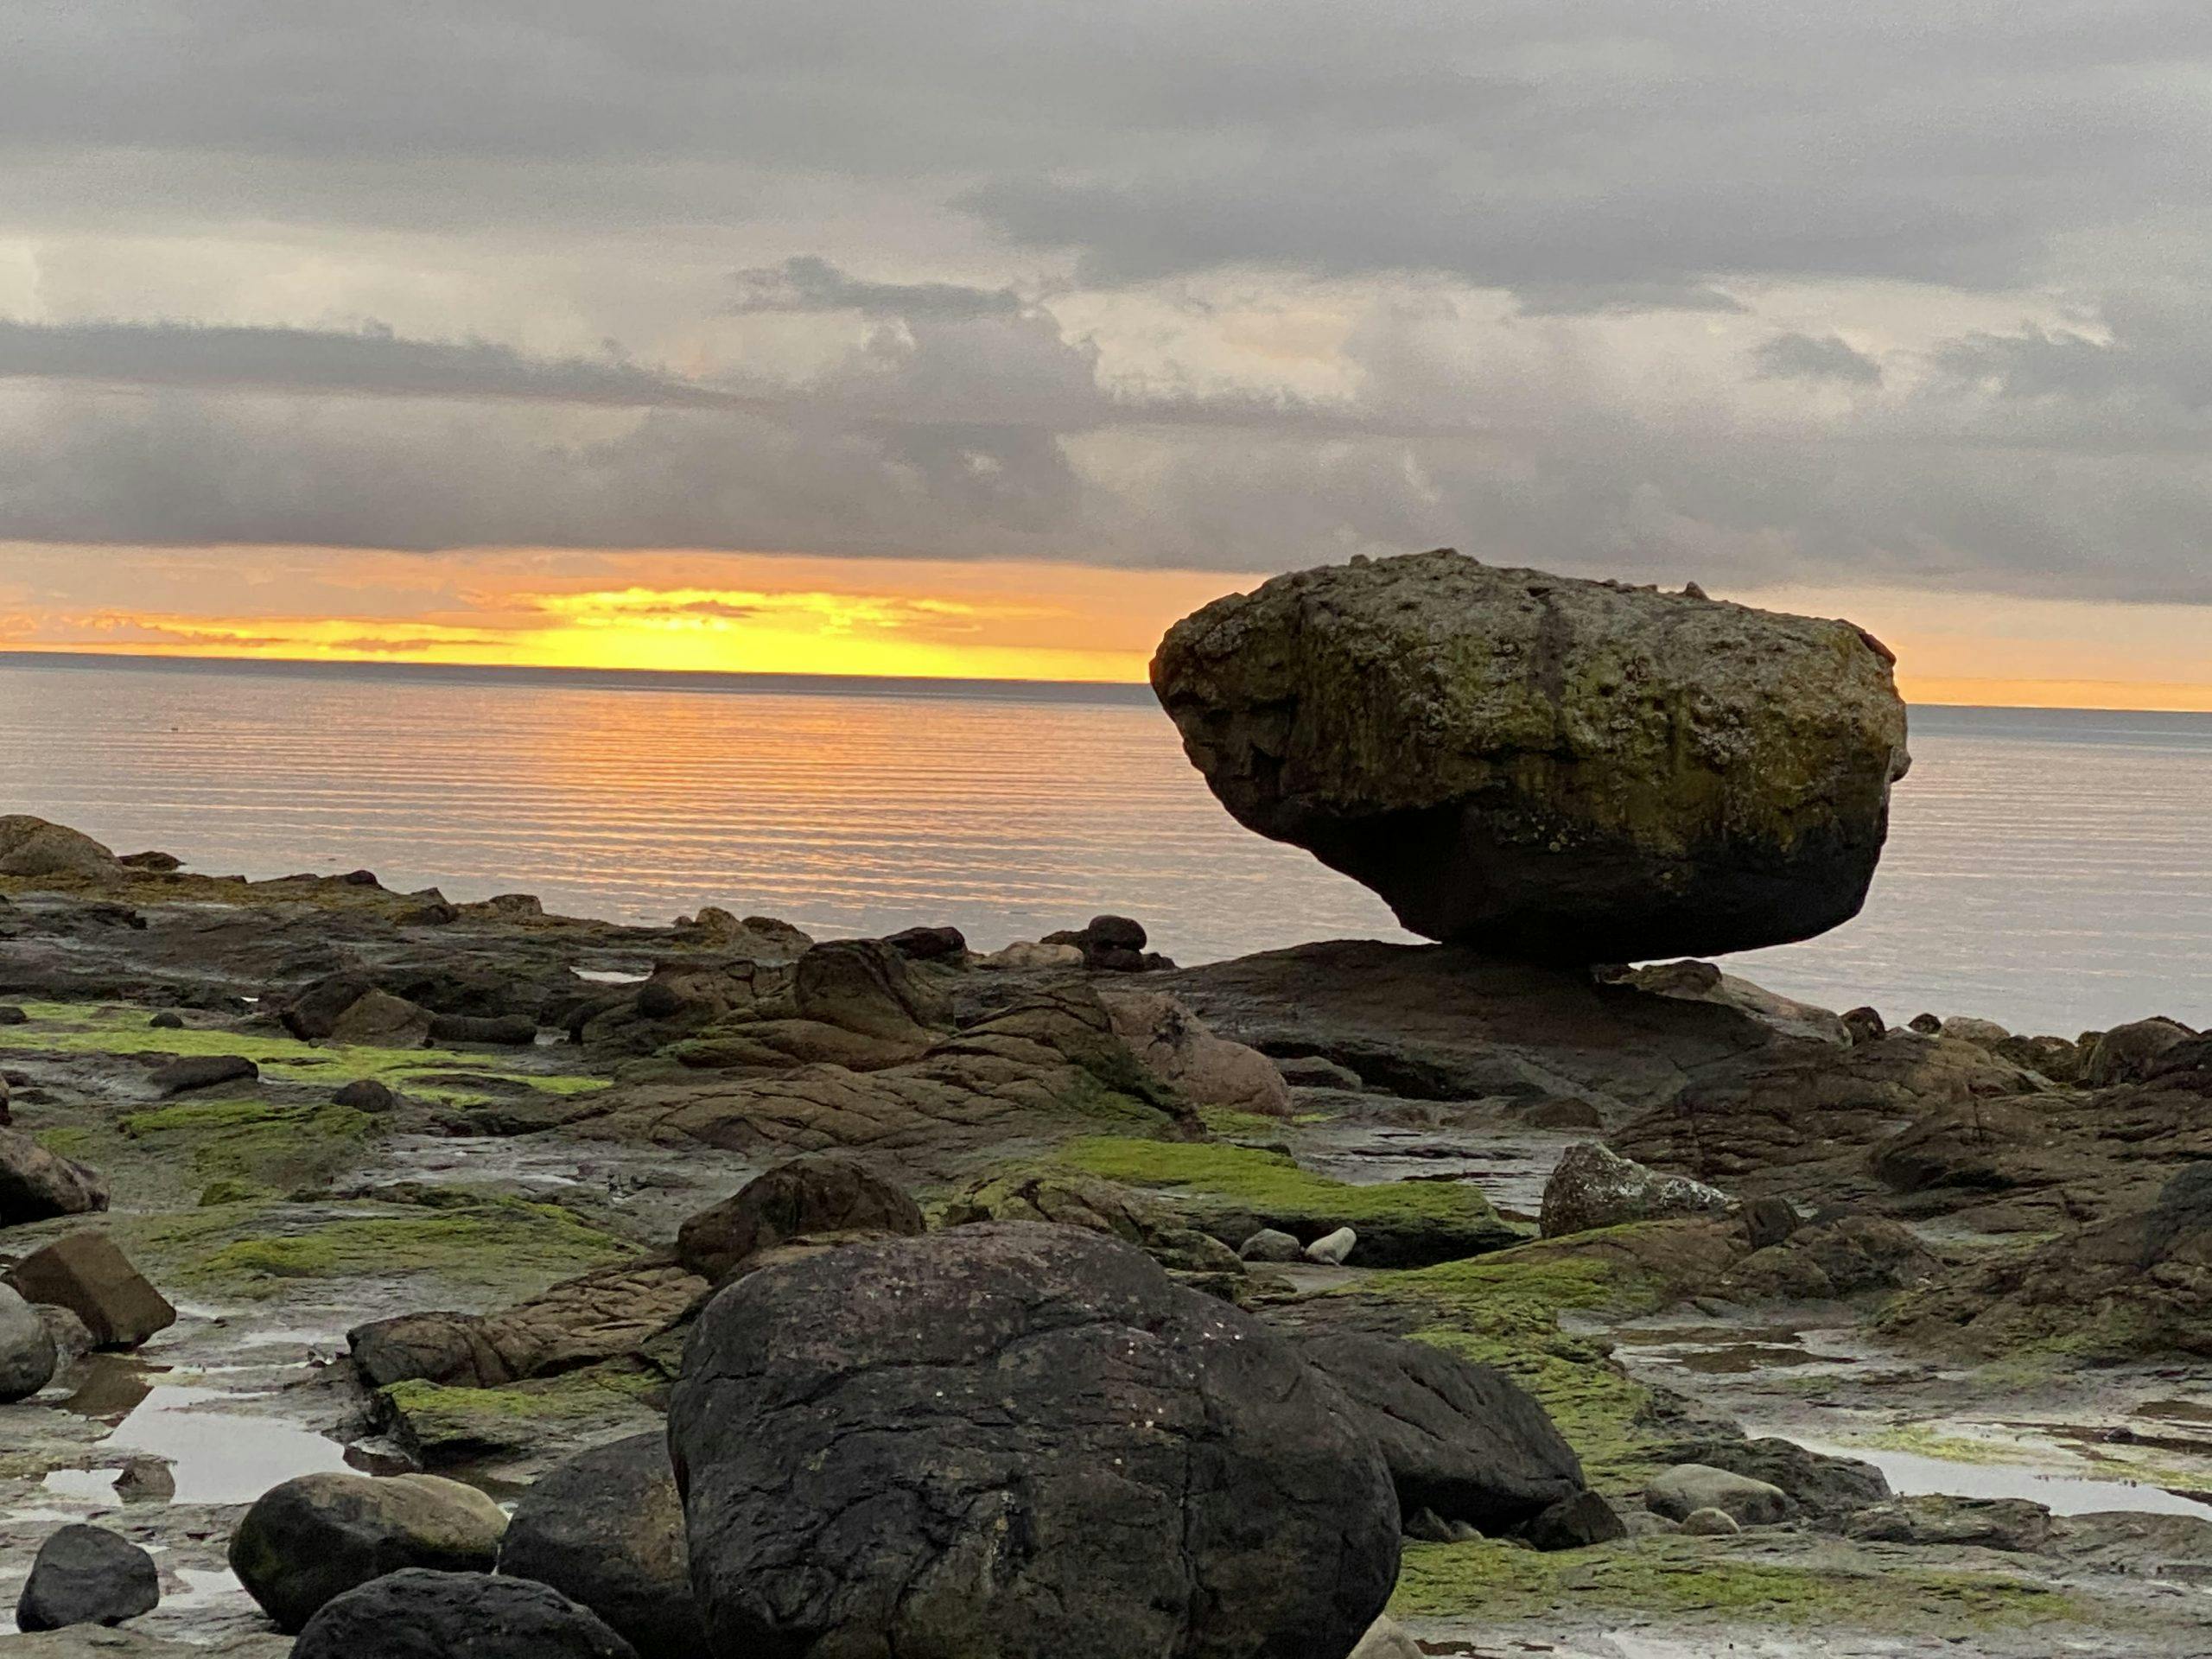 Photo of a boulder balancing precariously on the beach.